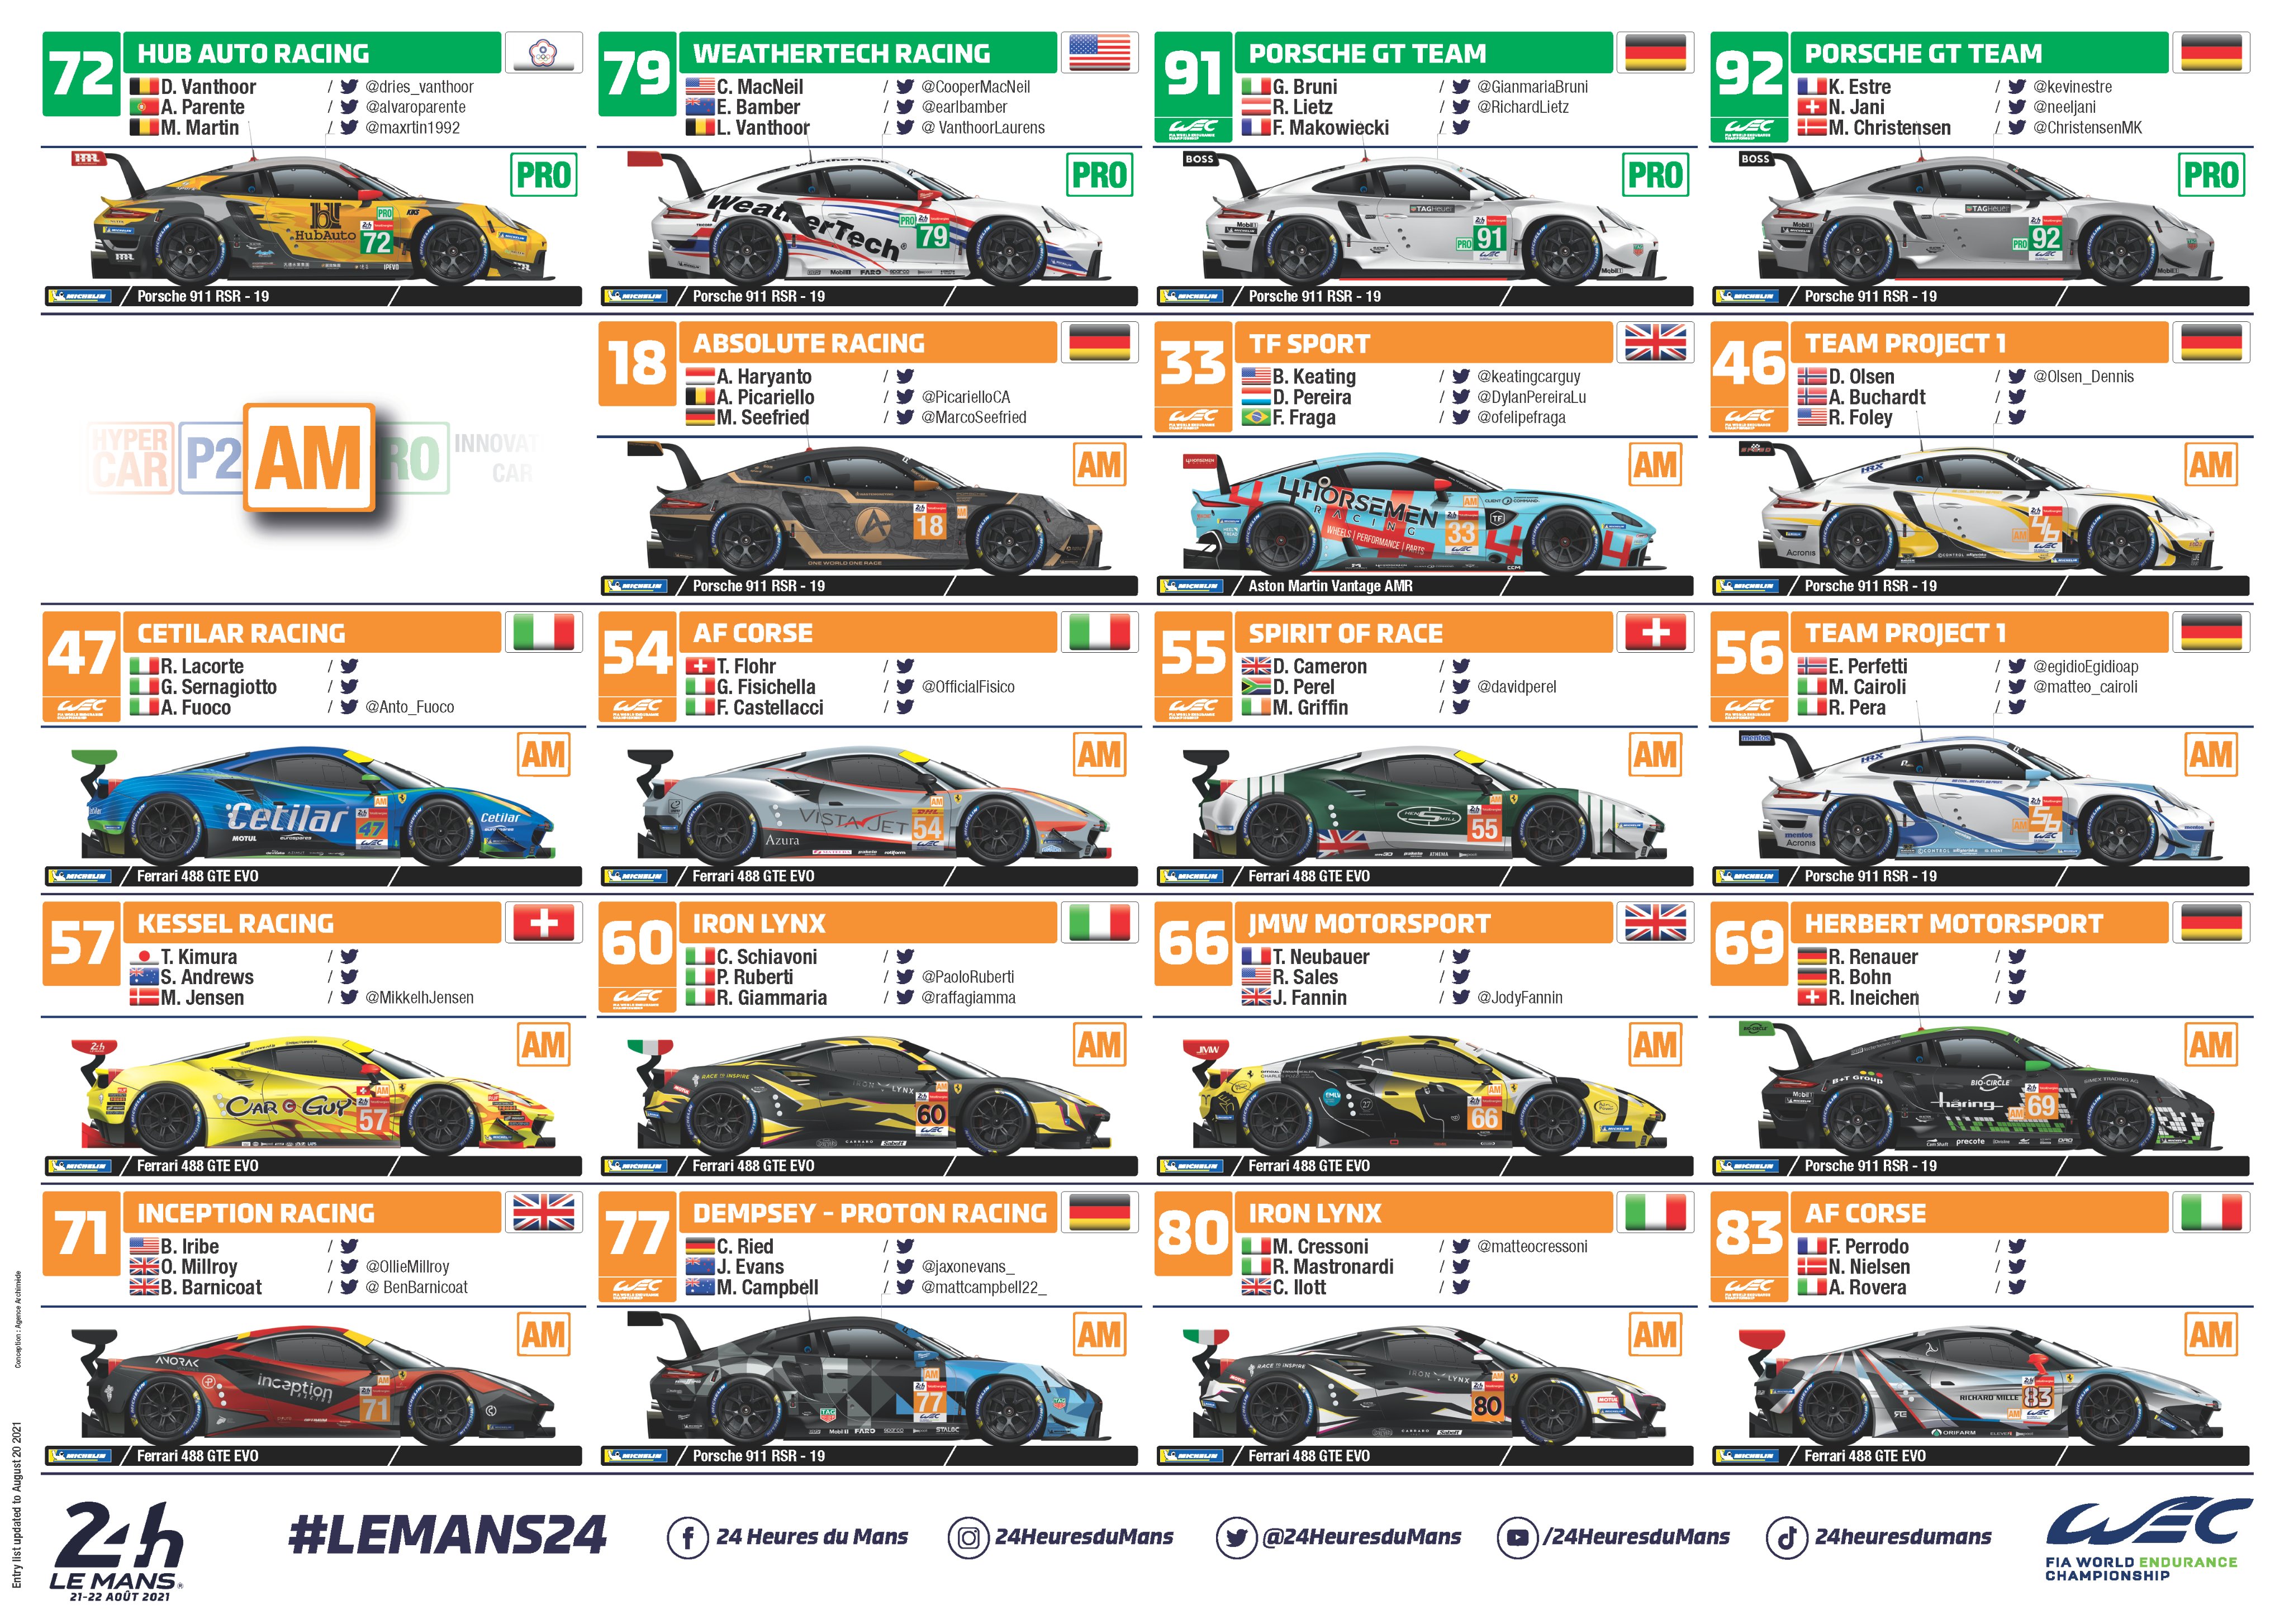 Spotter Guide - FIA World Endurance Championship - 6hours of